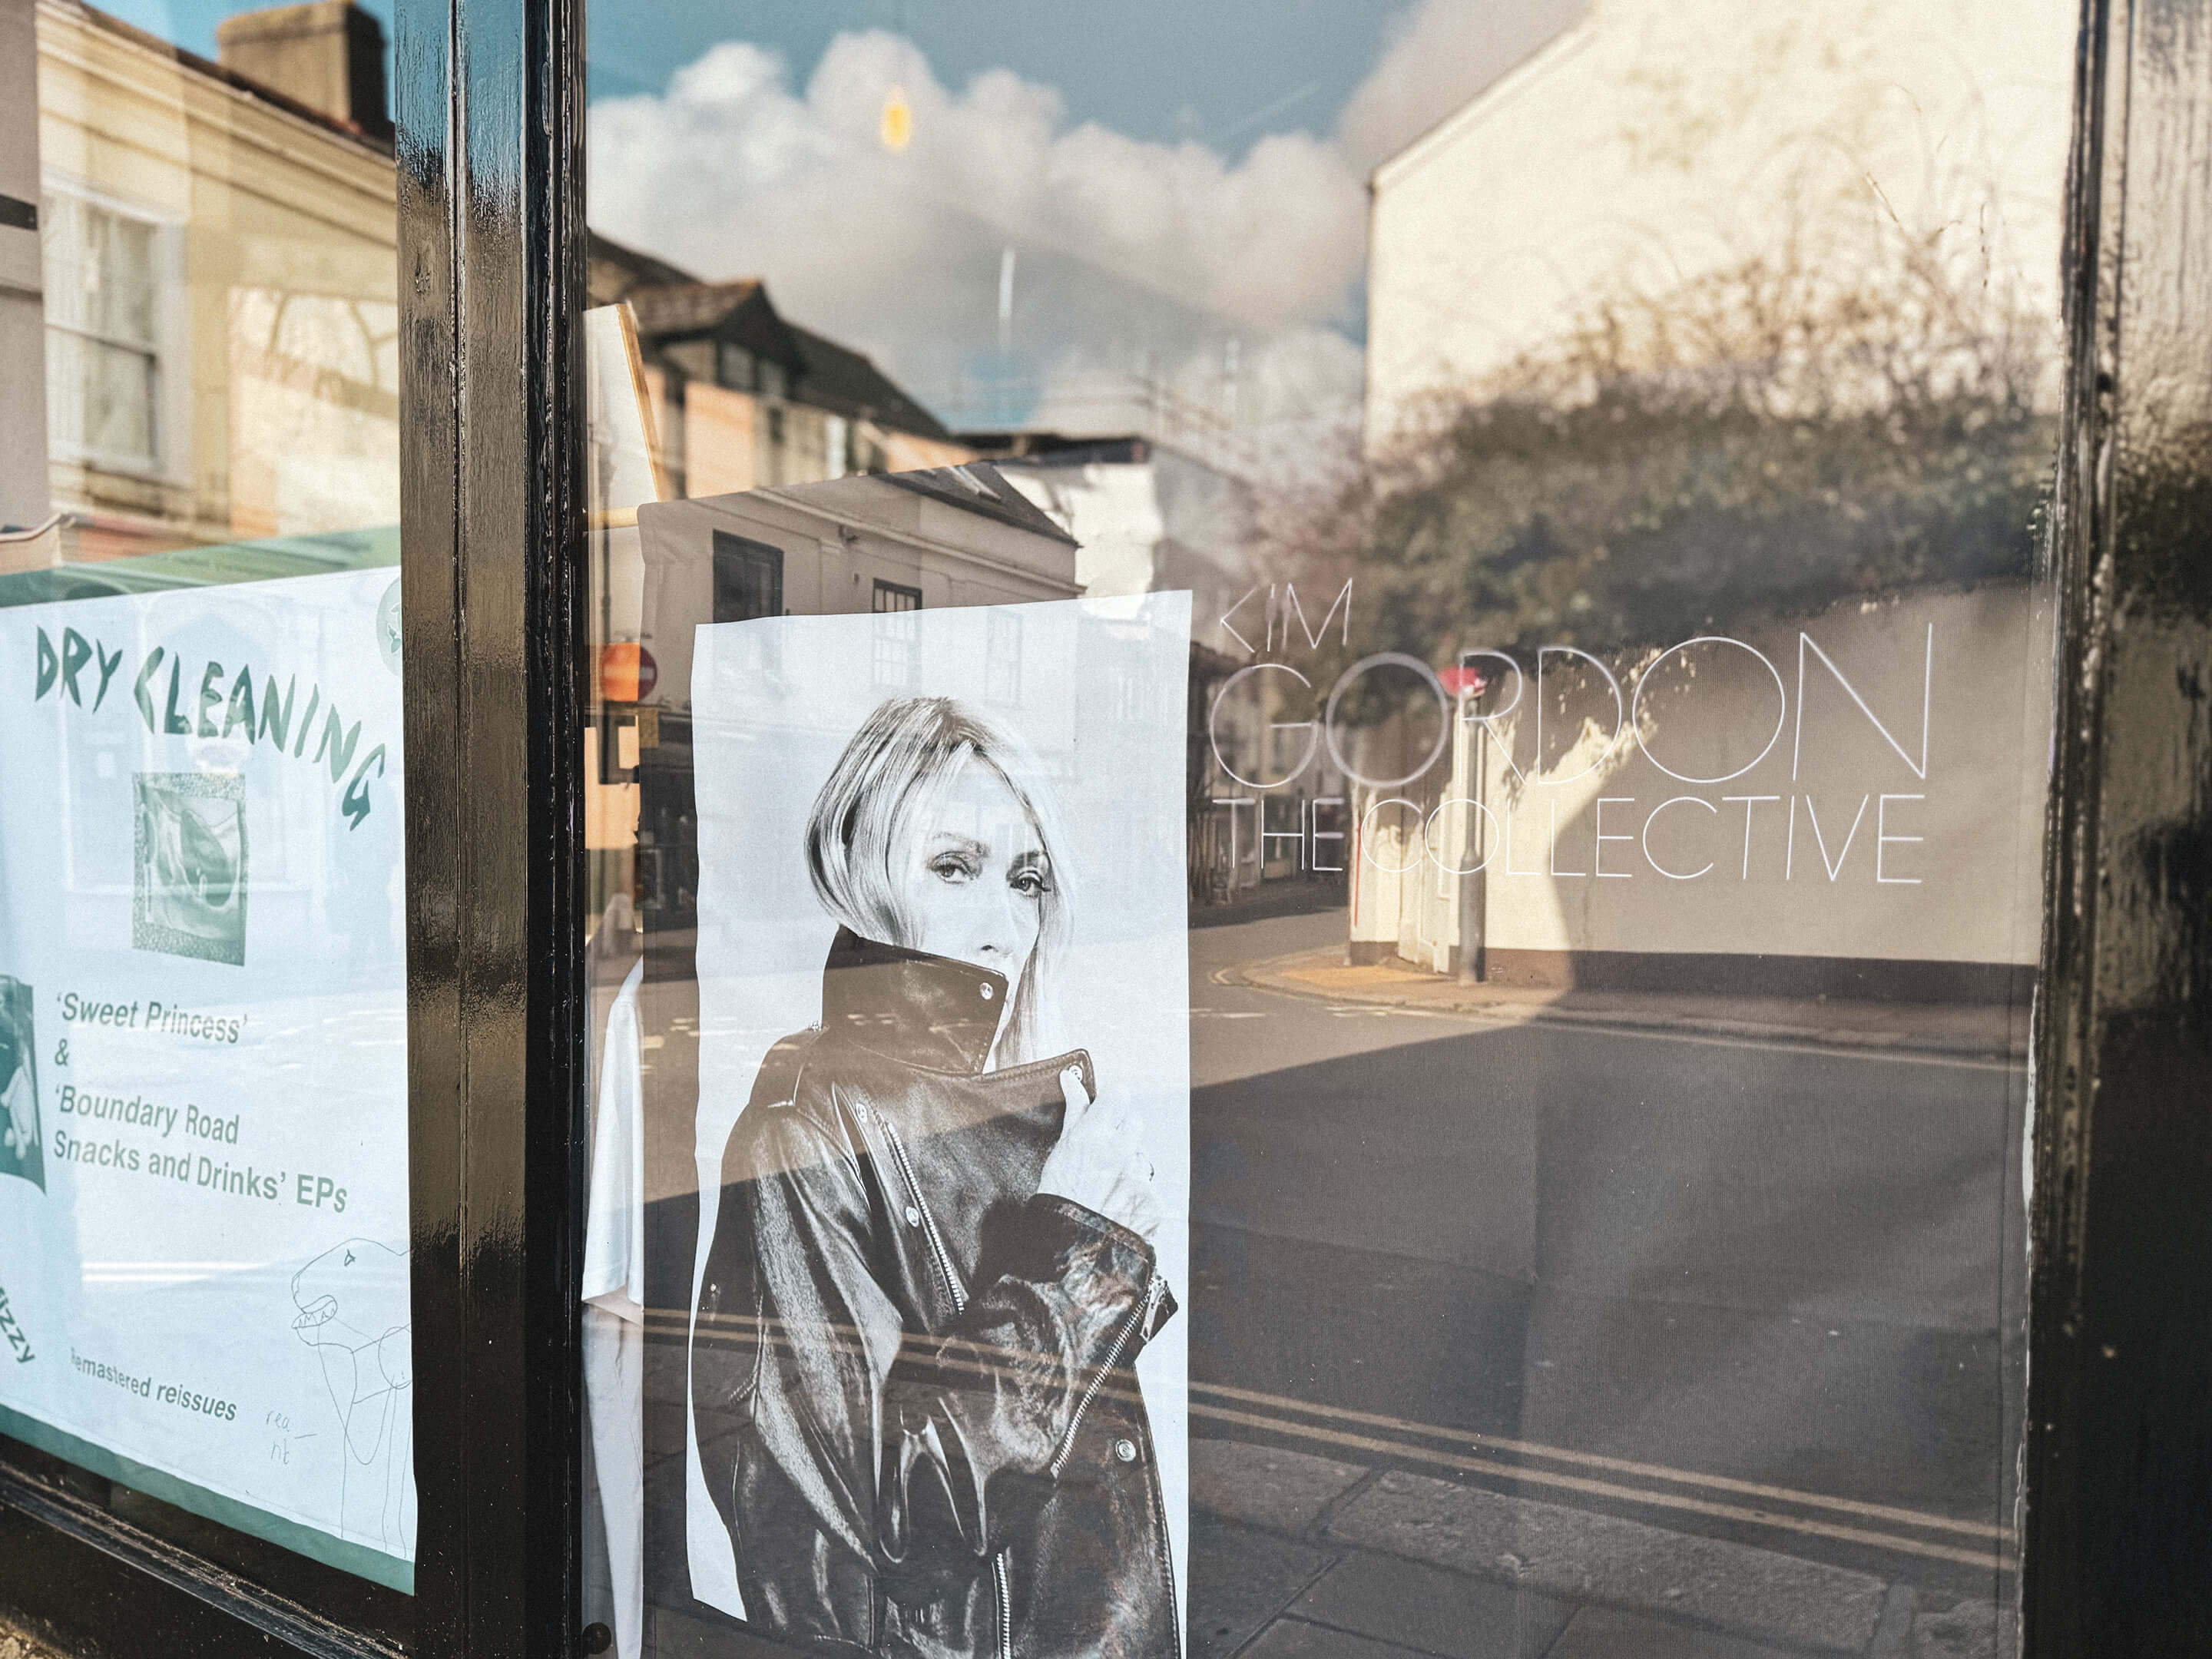 Kim Gordon, The Collective, Album Review, Seven Days